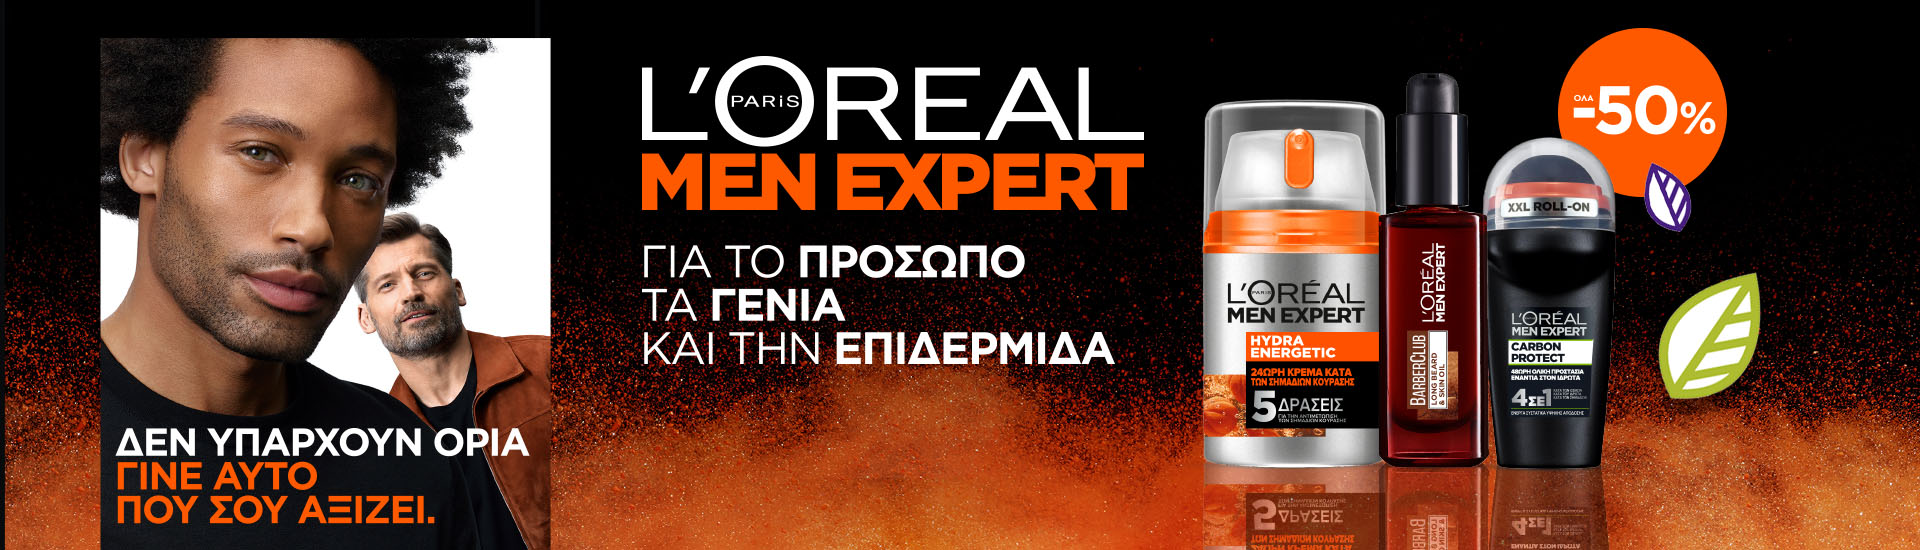 LOreal Men Expert ΟΛΑ -50%!